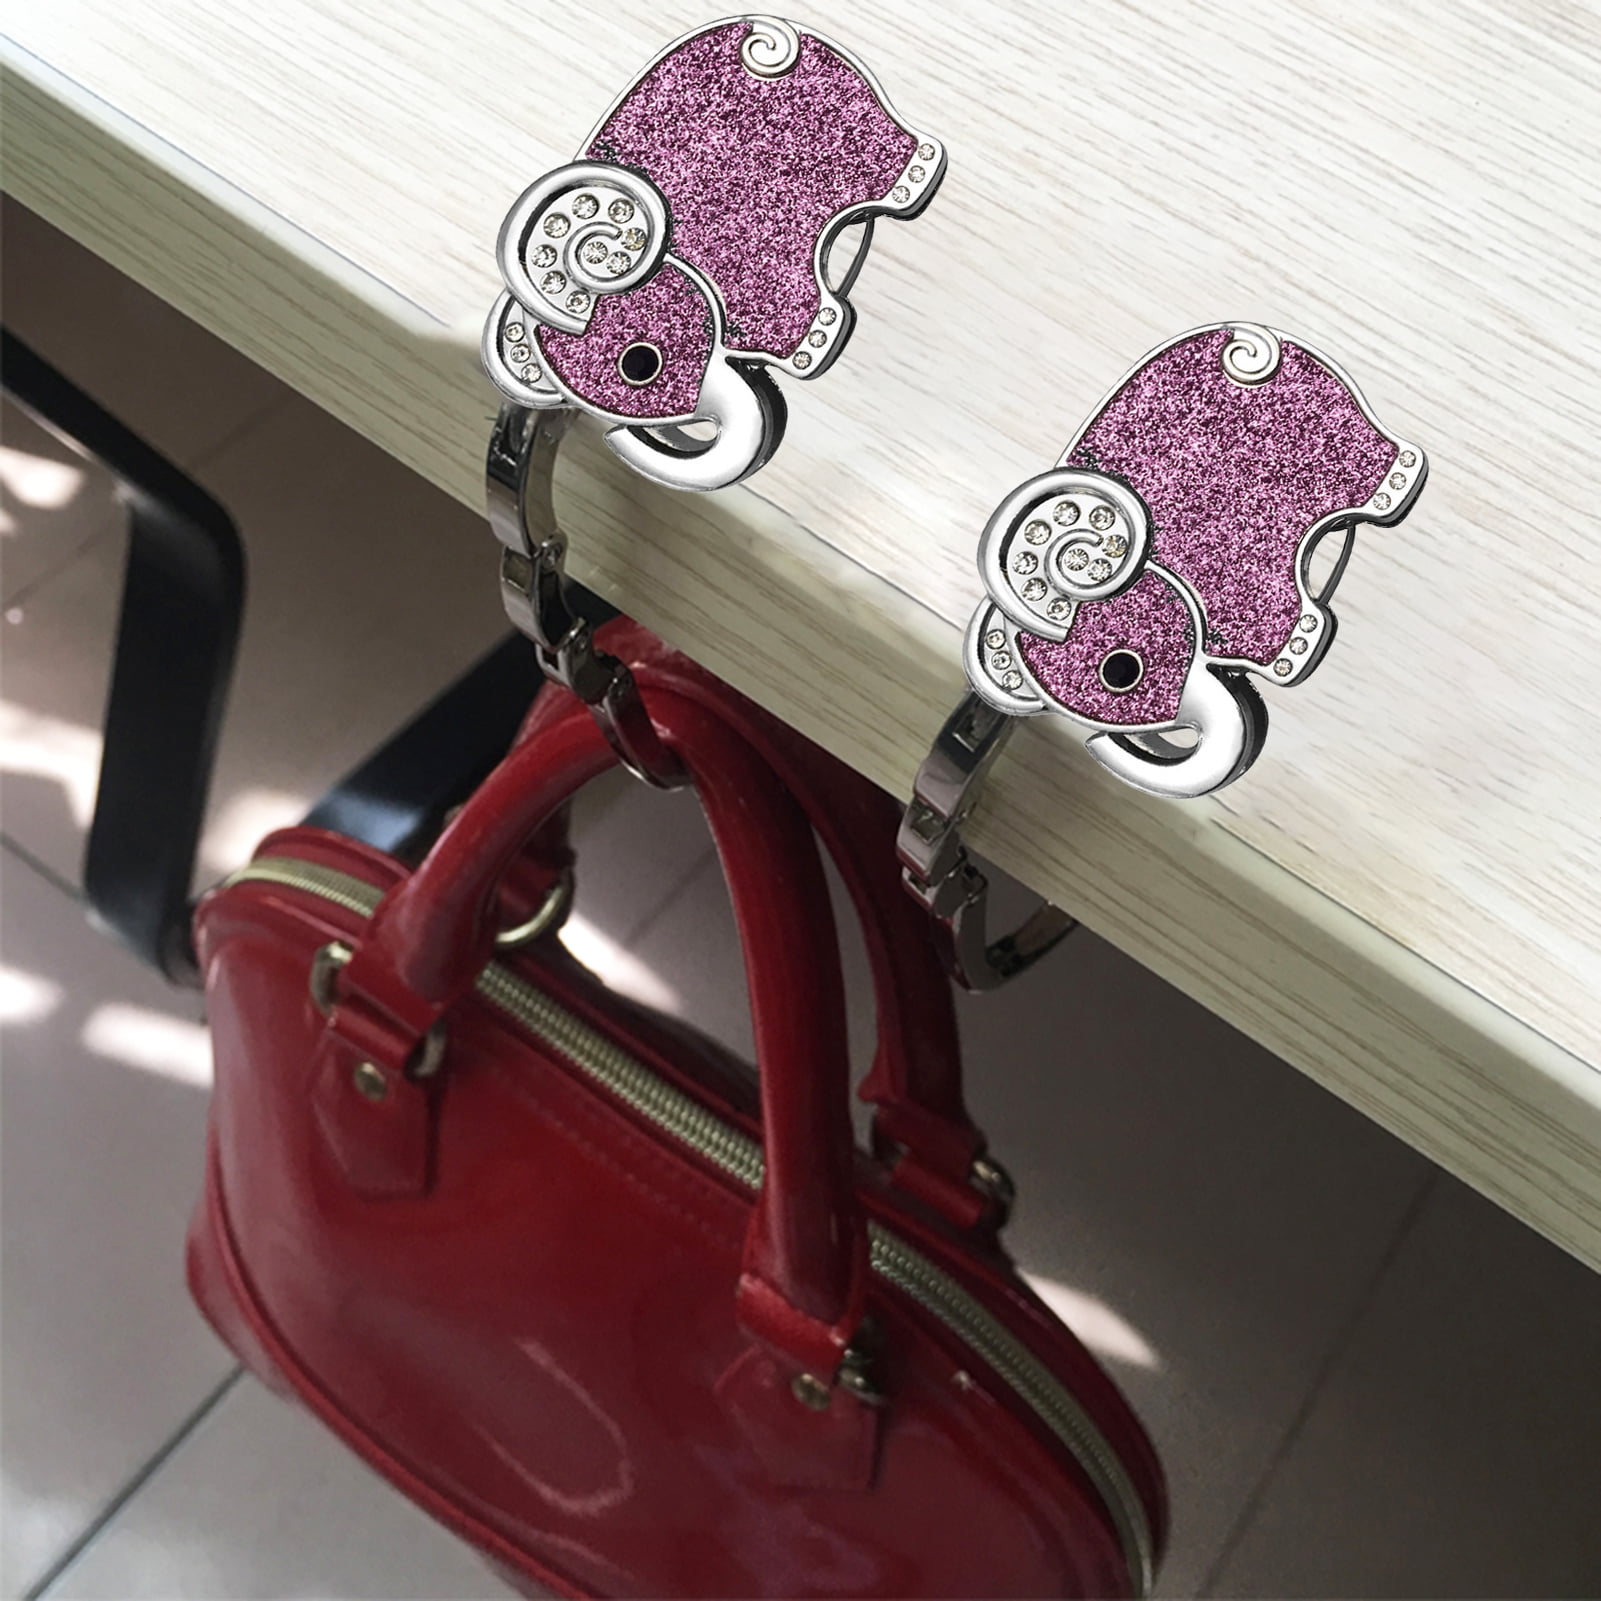 Travelwant Purse Hook Long Handbag Hanger for Table Desk, Creatiee Portable Bag Holder Under Counter Handbags Hook for Women Girl, Women's, Size